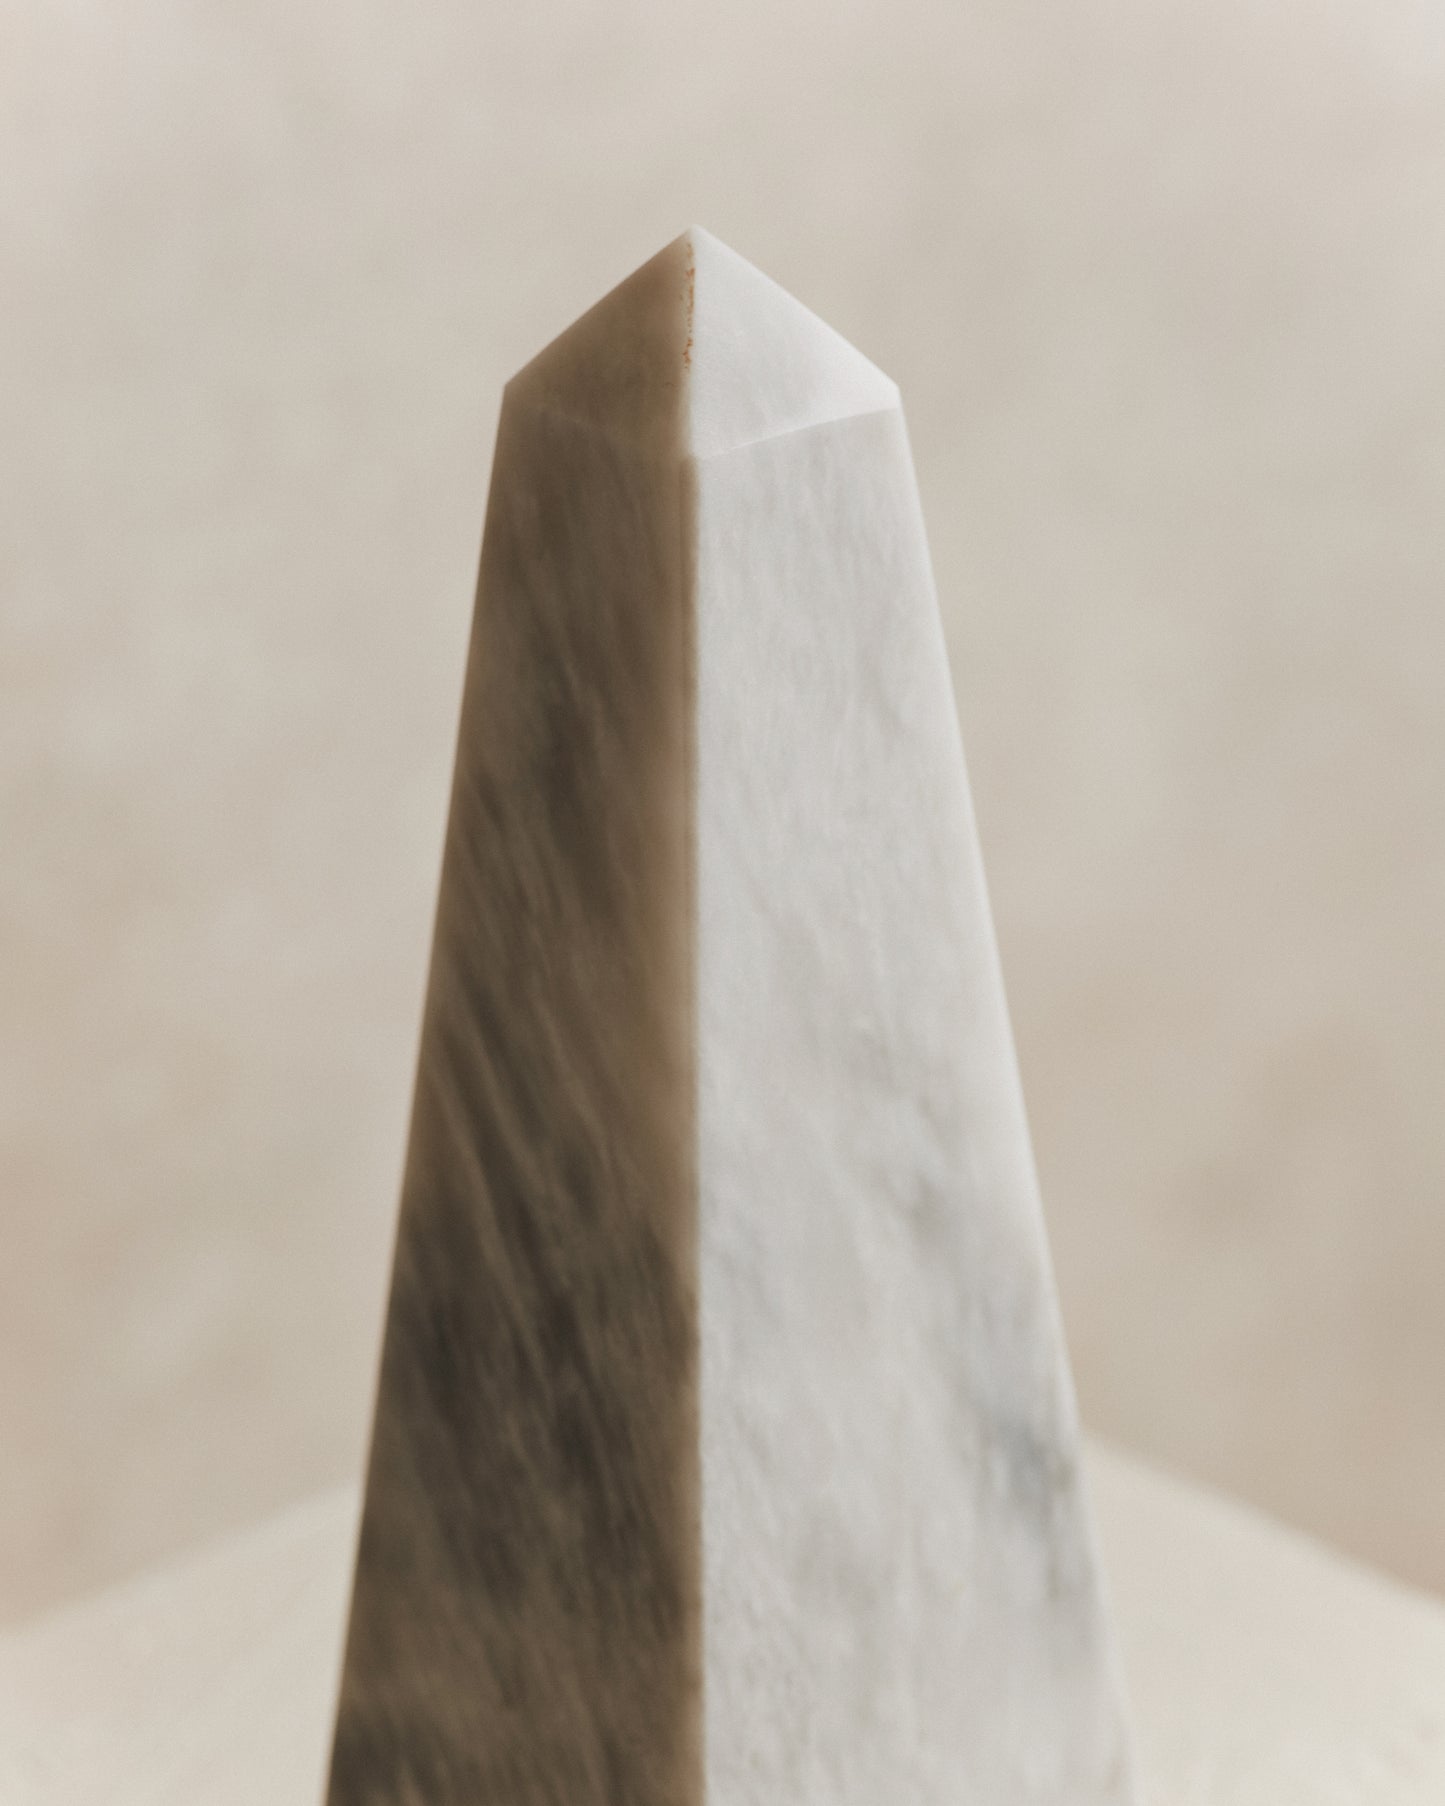 Noble Small Marble Obelisk in White